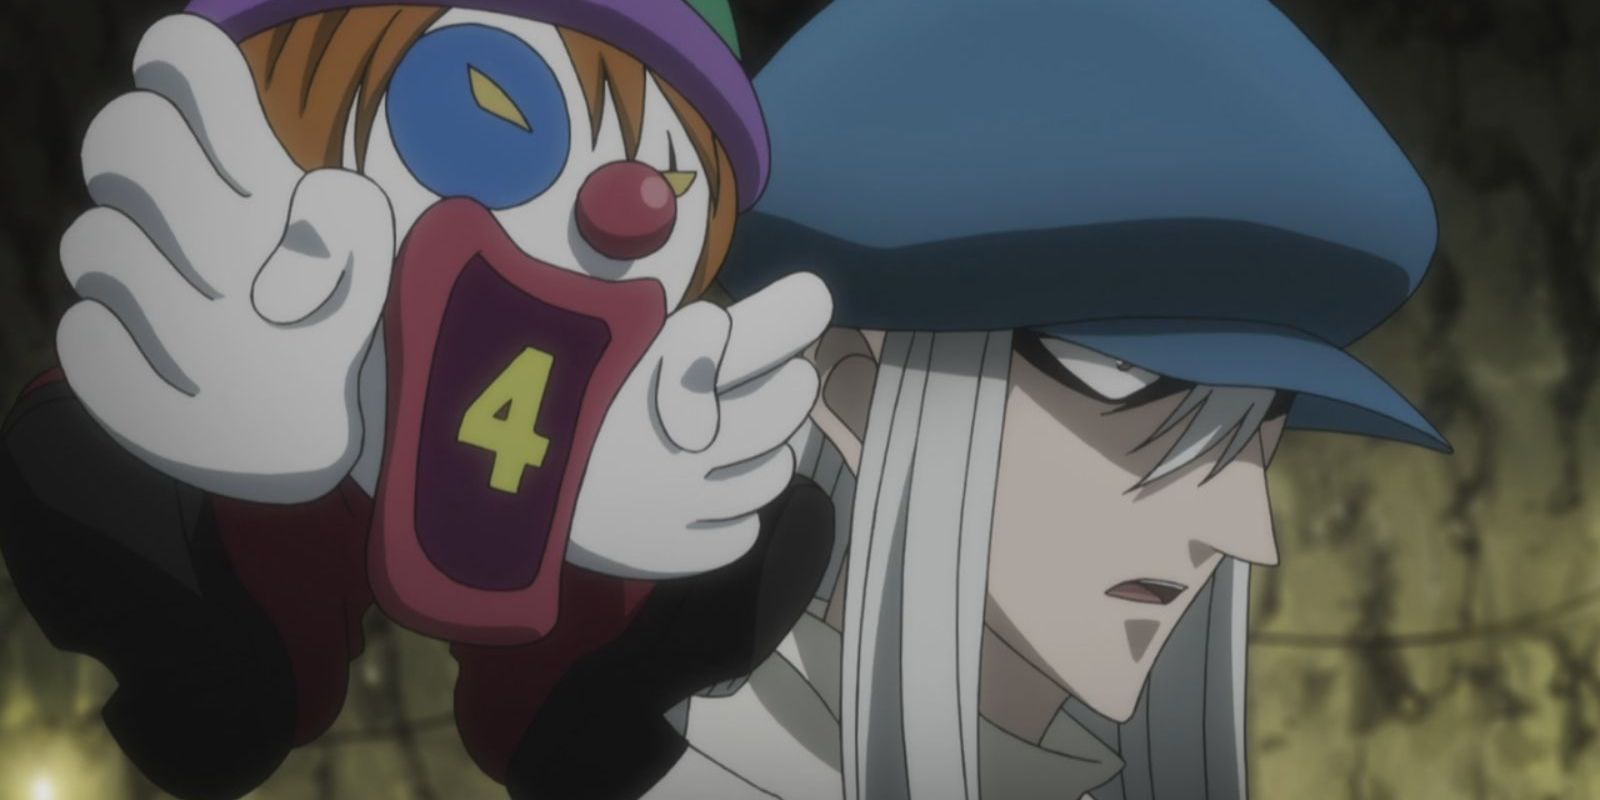 Kite in a cap with a clown puppet Hunter x Hunter